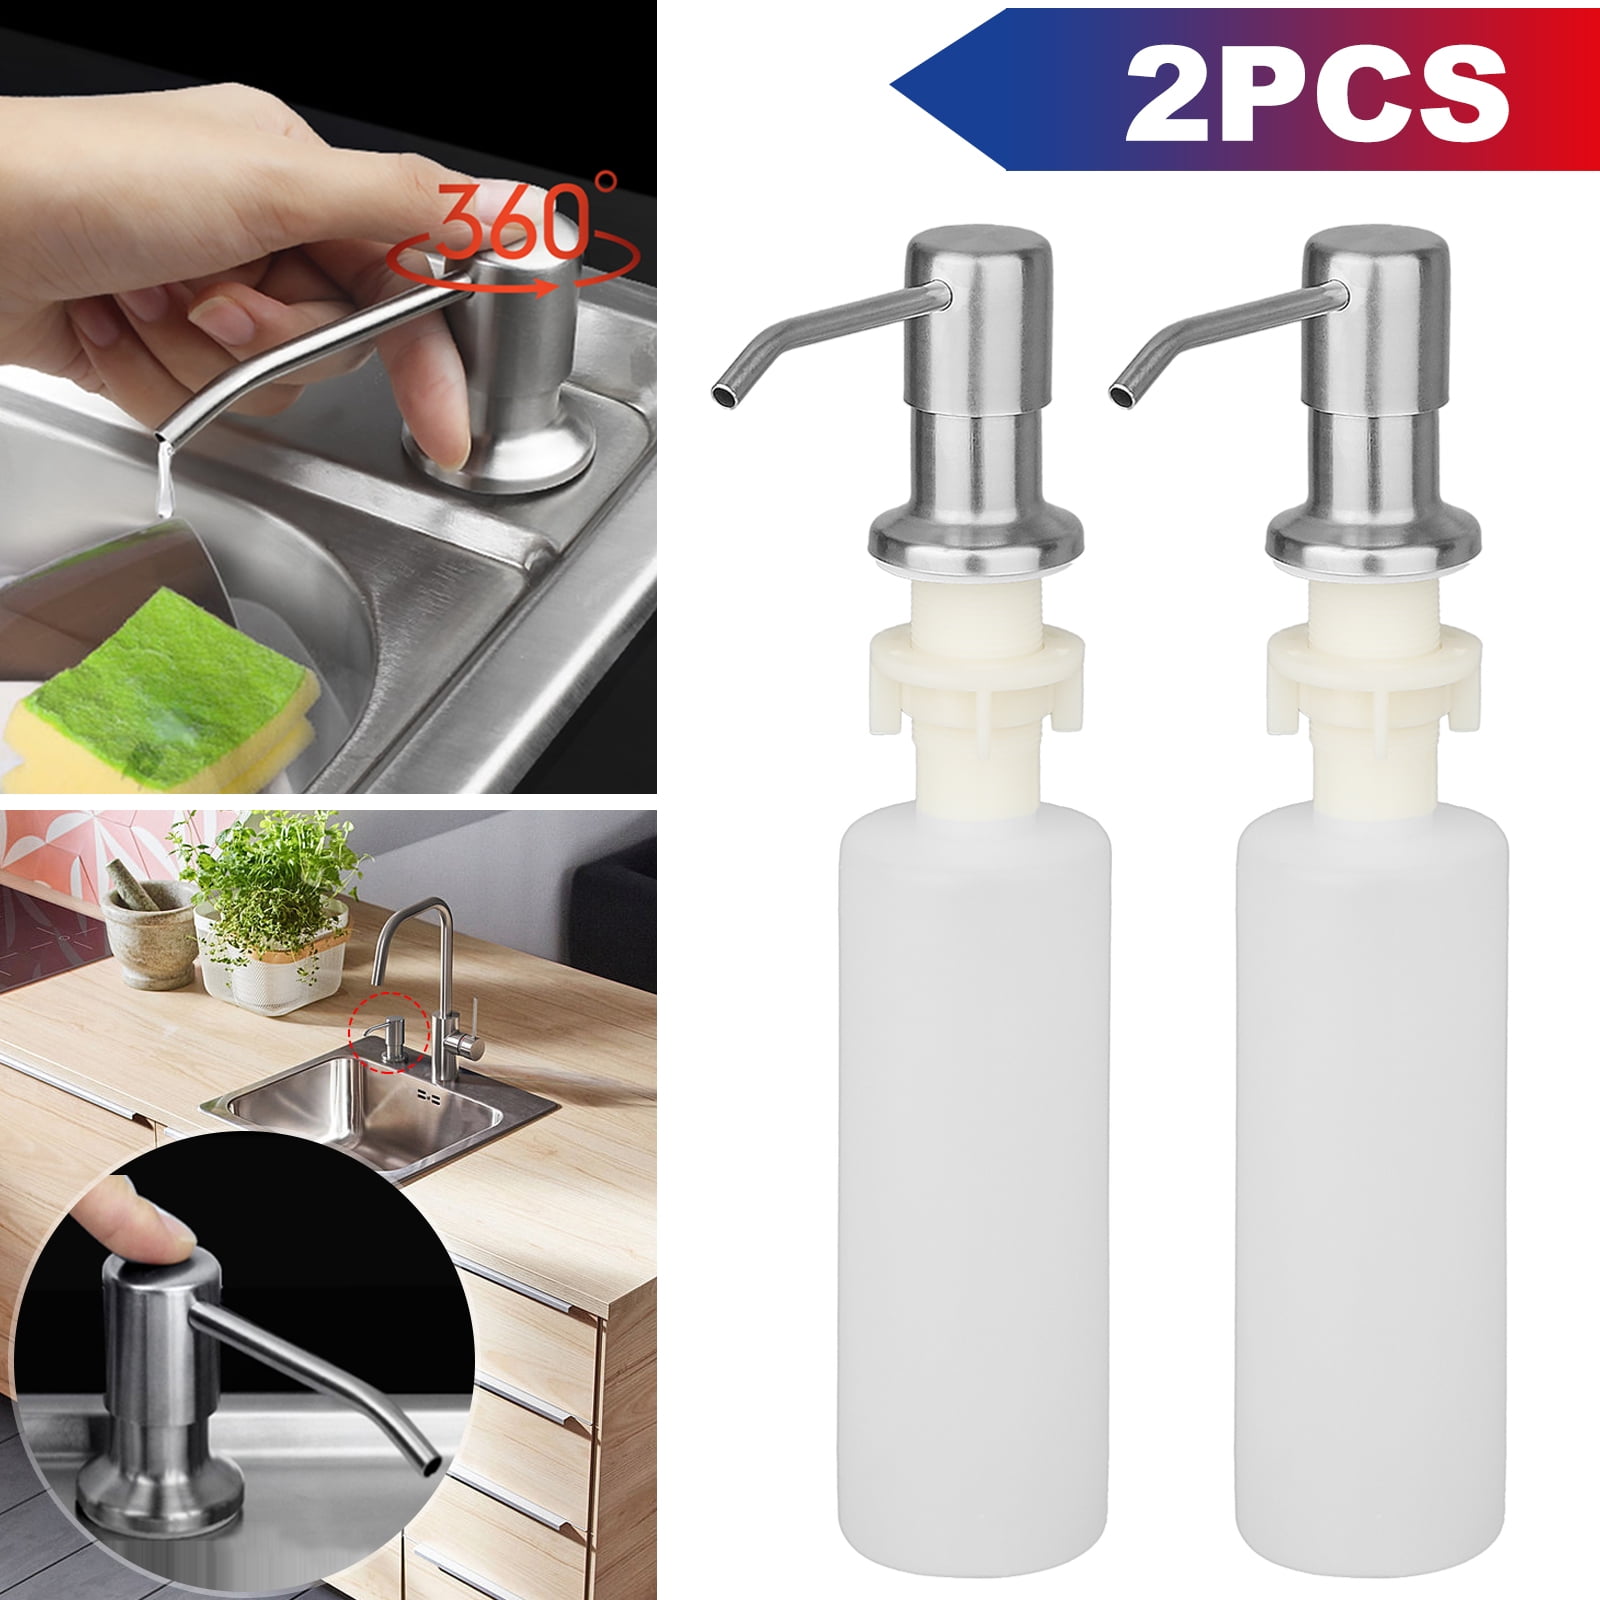 2020 DIY Soap Dispenser Pump & 47" Extension Tube Kit Fits Kitchen Sink Dishing